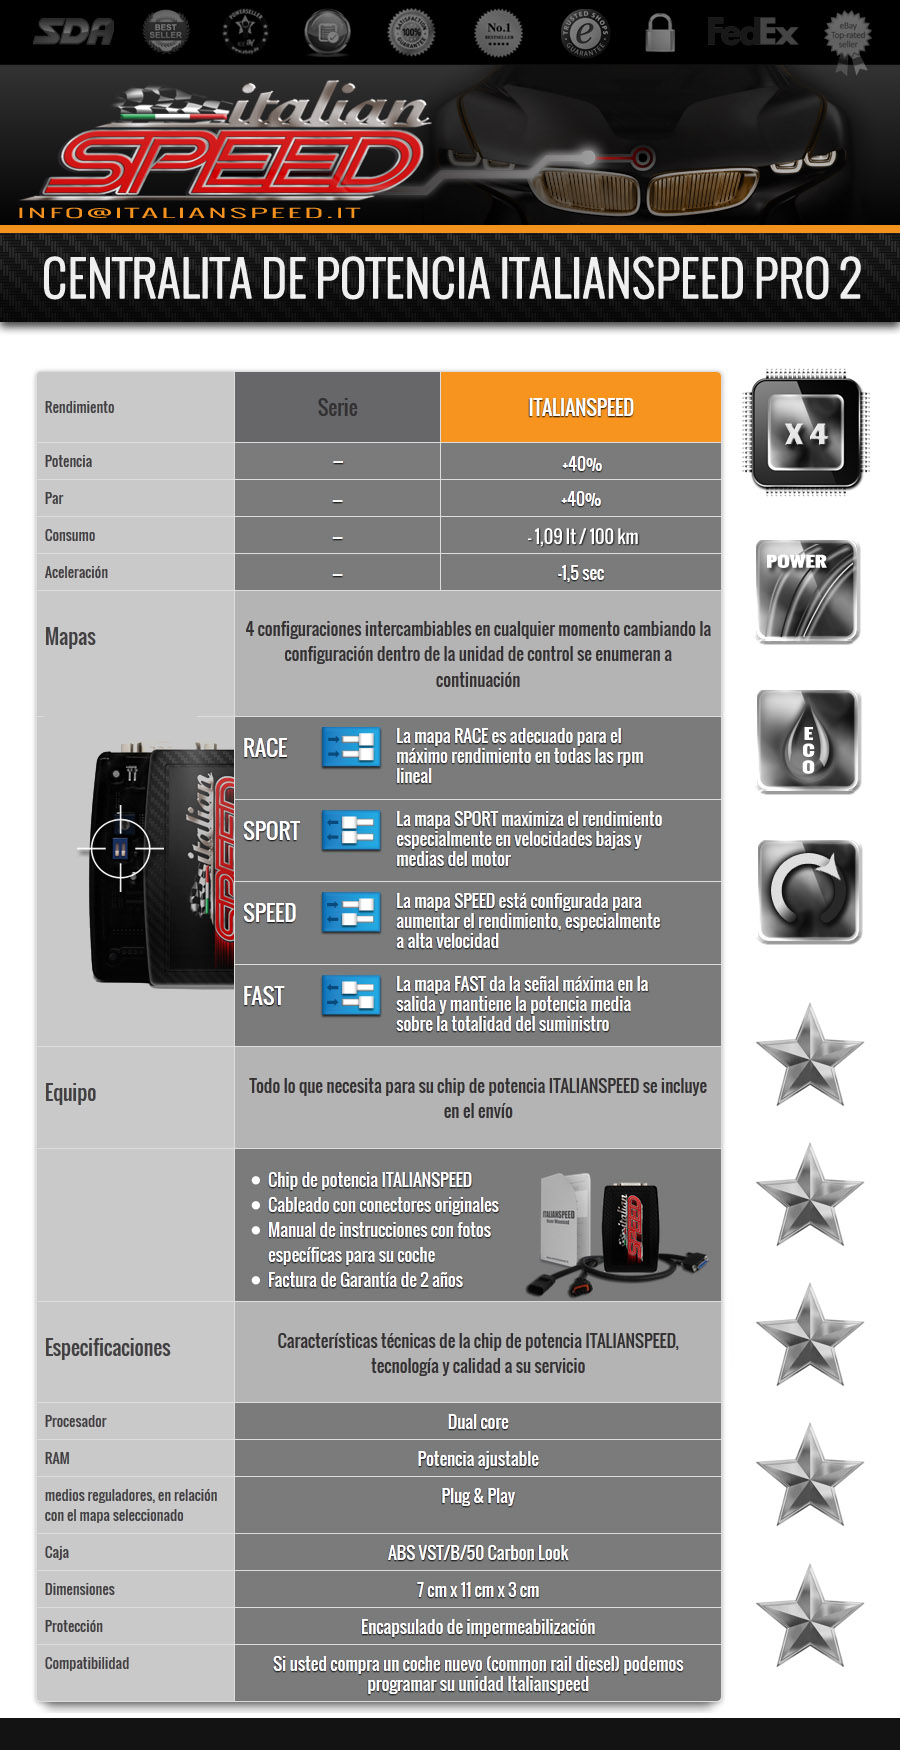 Chiptuning power box Mercedes Viano 2.2 CDI 163 hp Express Shipping